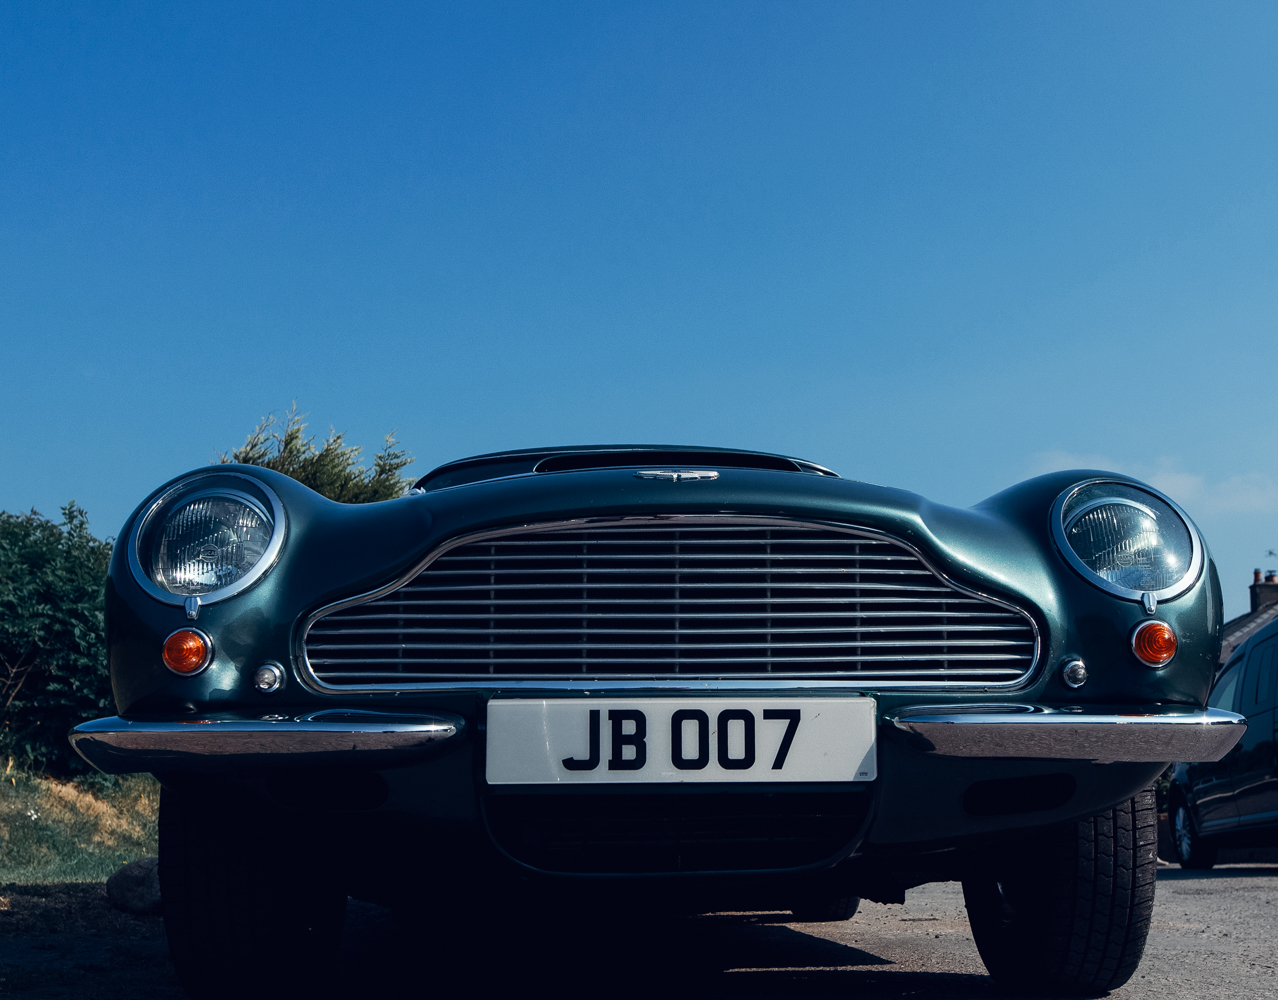 Full front shot of the Aston Martin car